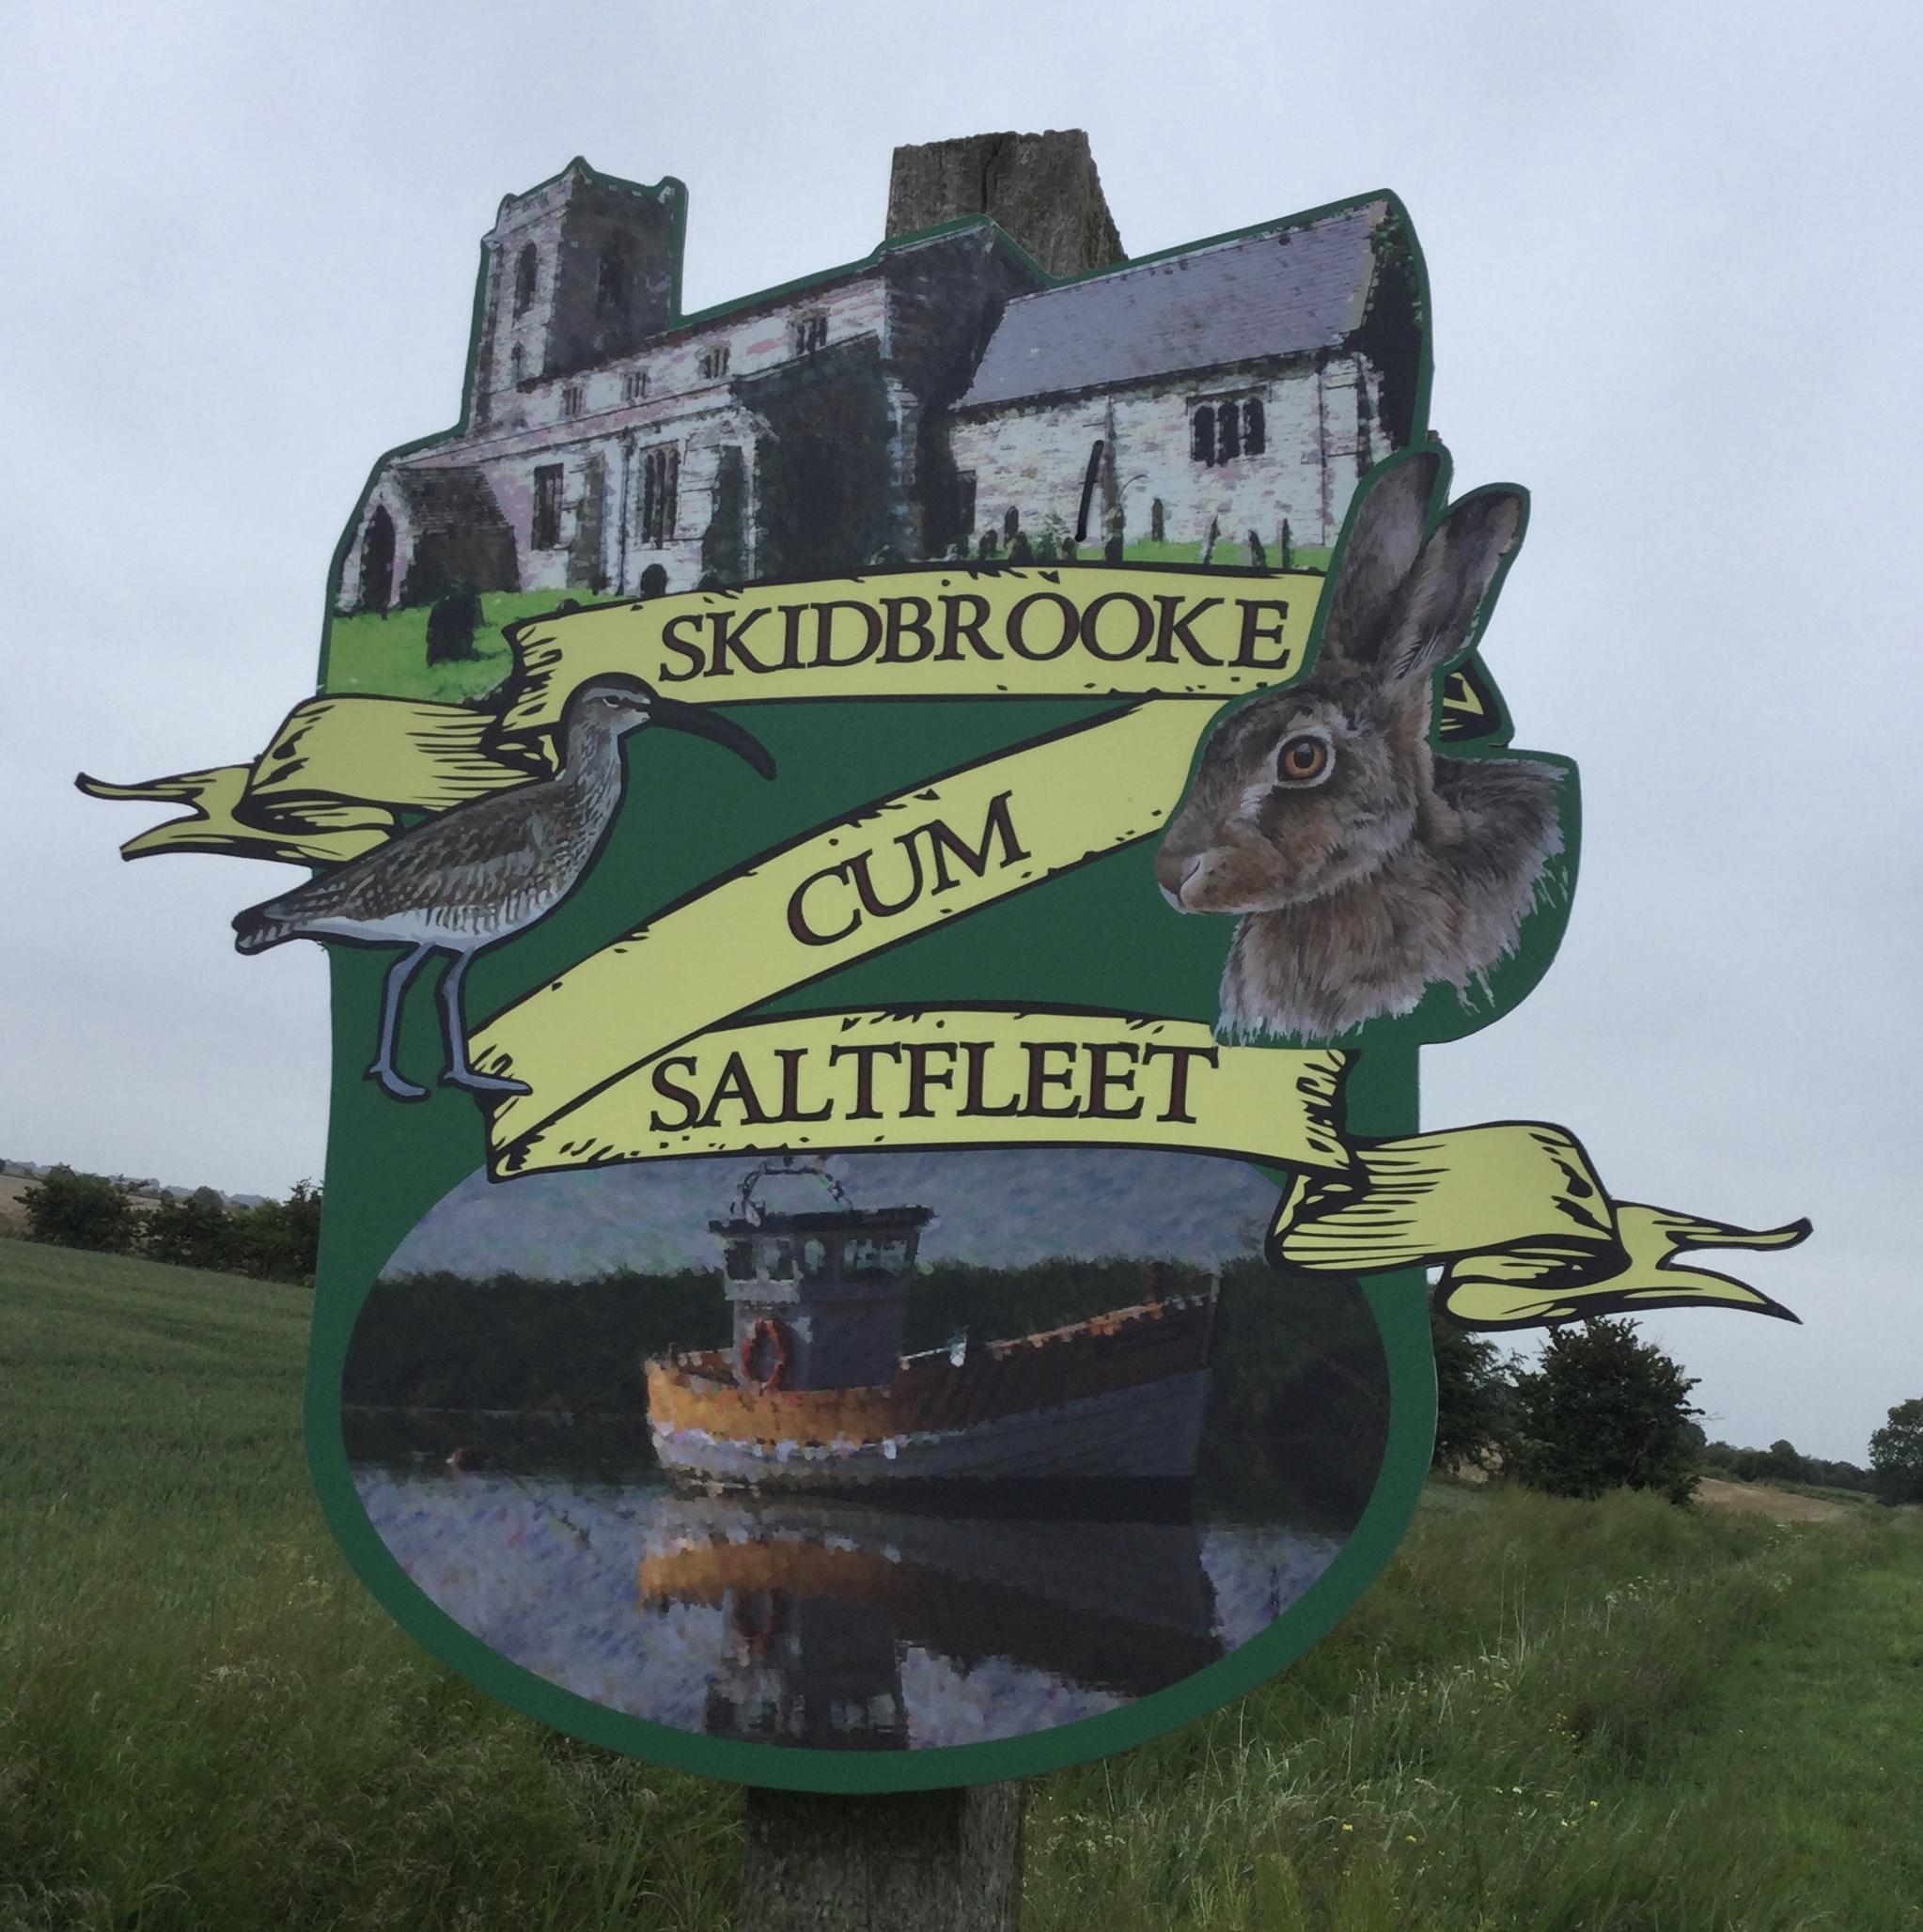 z-Skidbrooke cum Saltfleet welcome sign